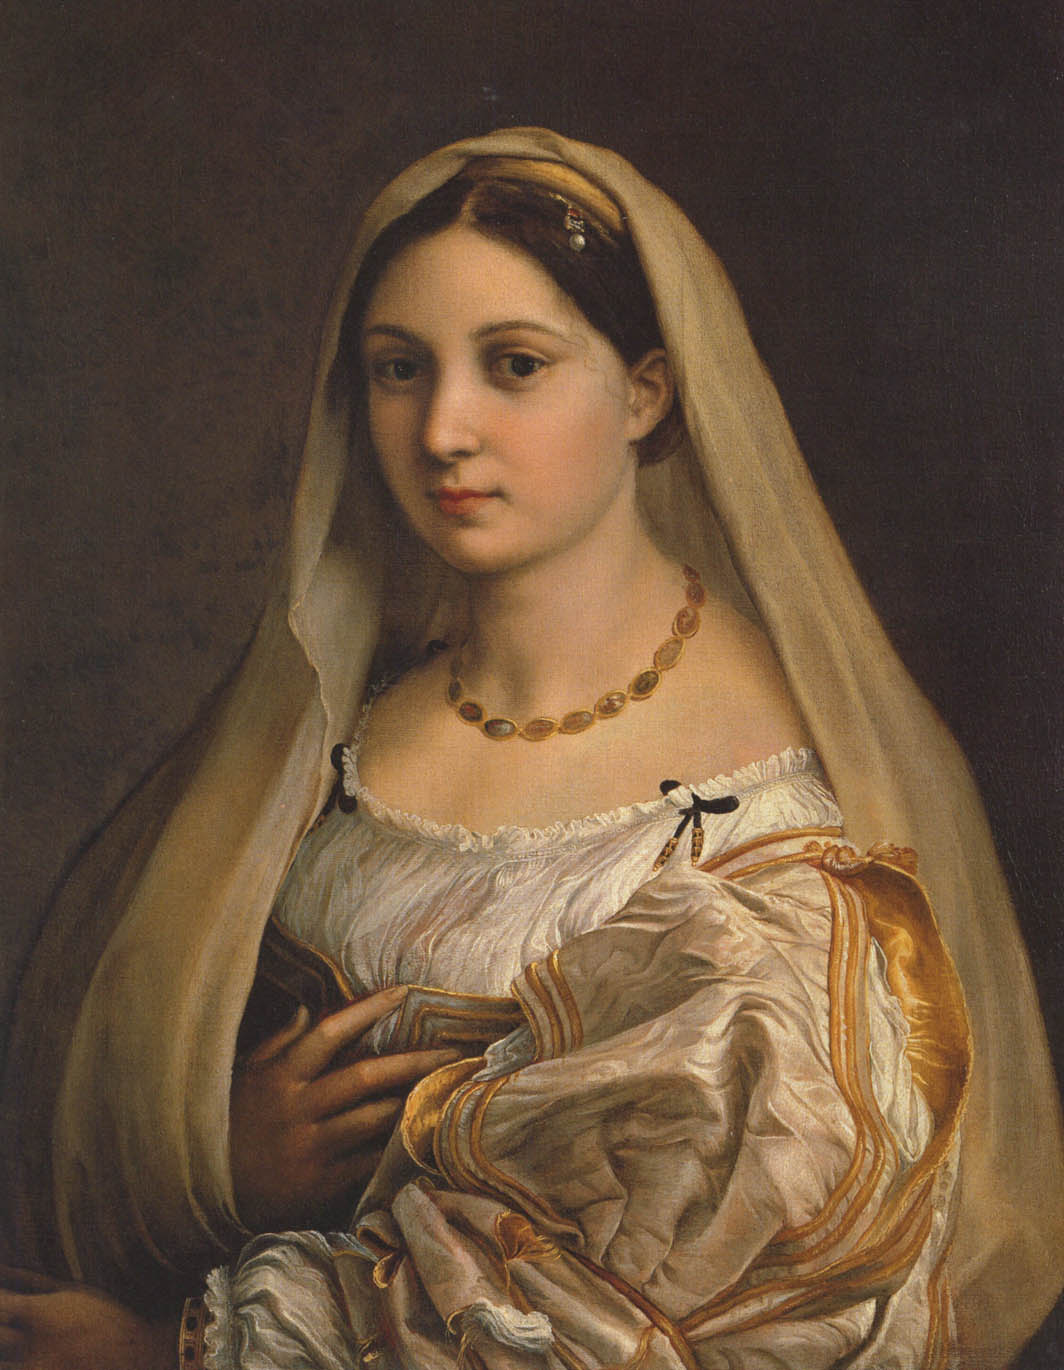 La Velata (c. 1515)